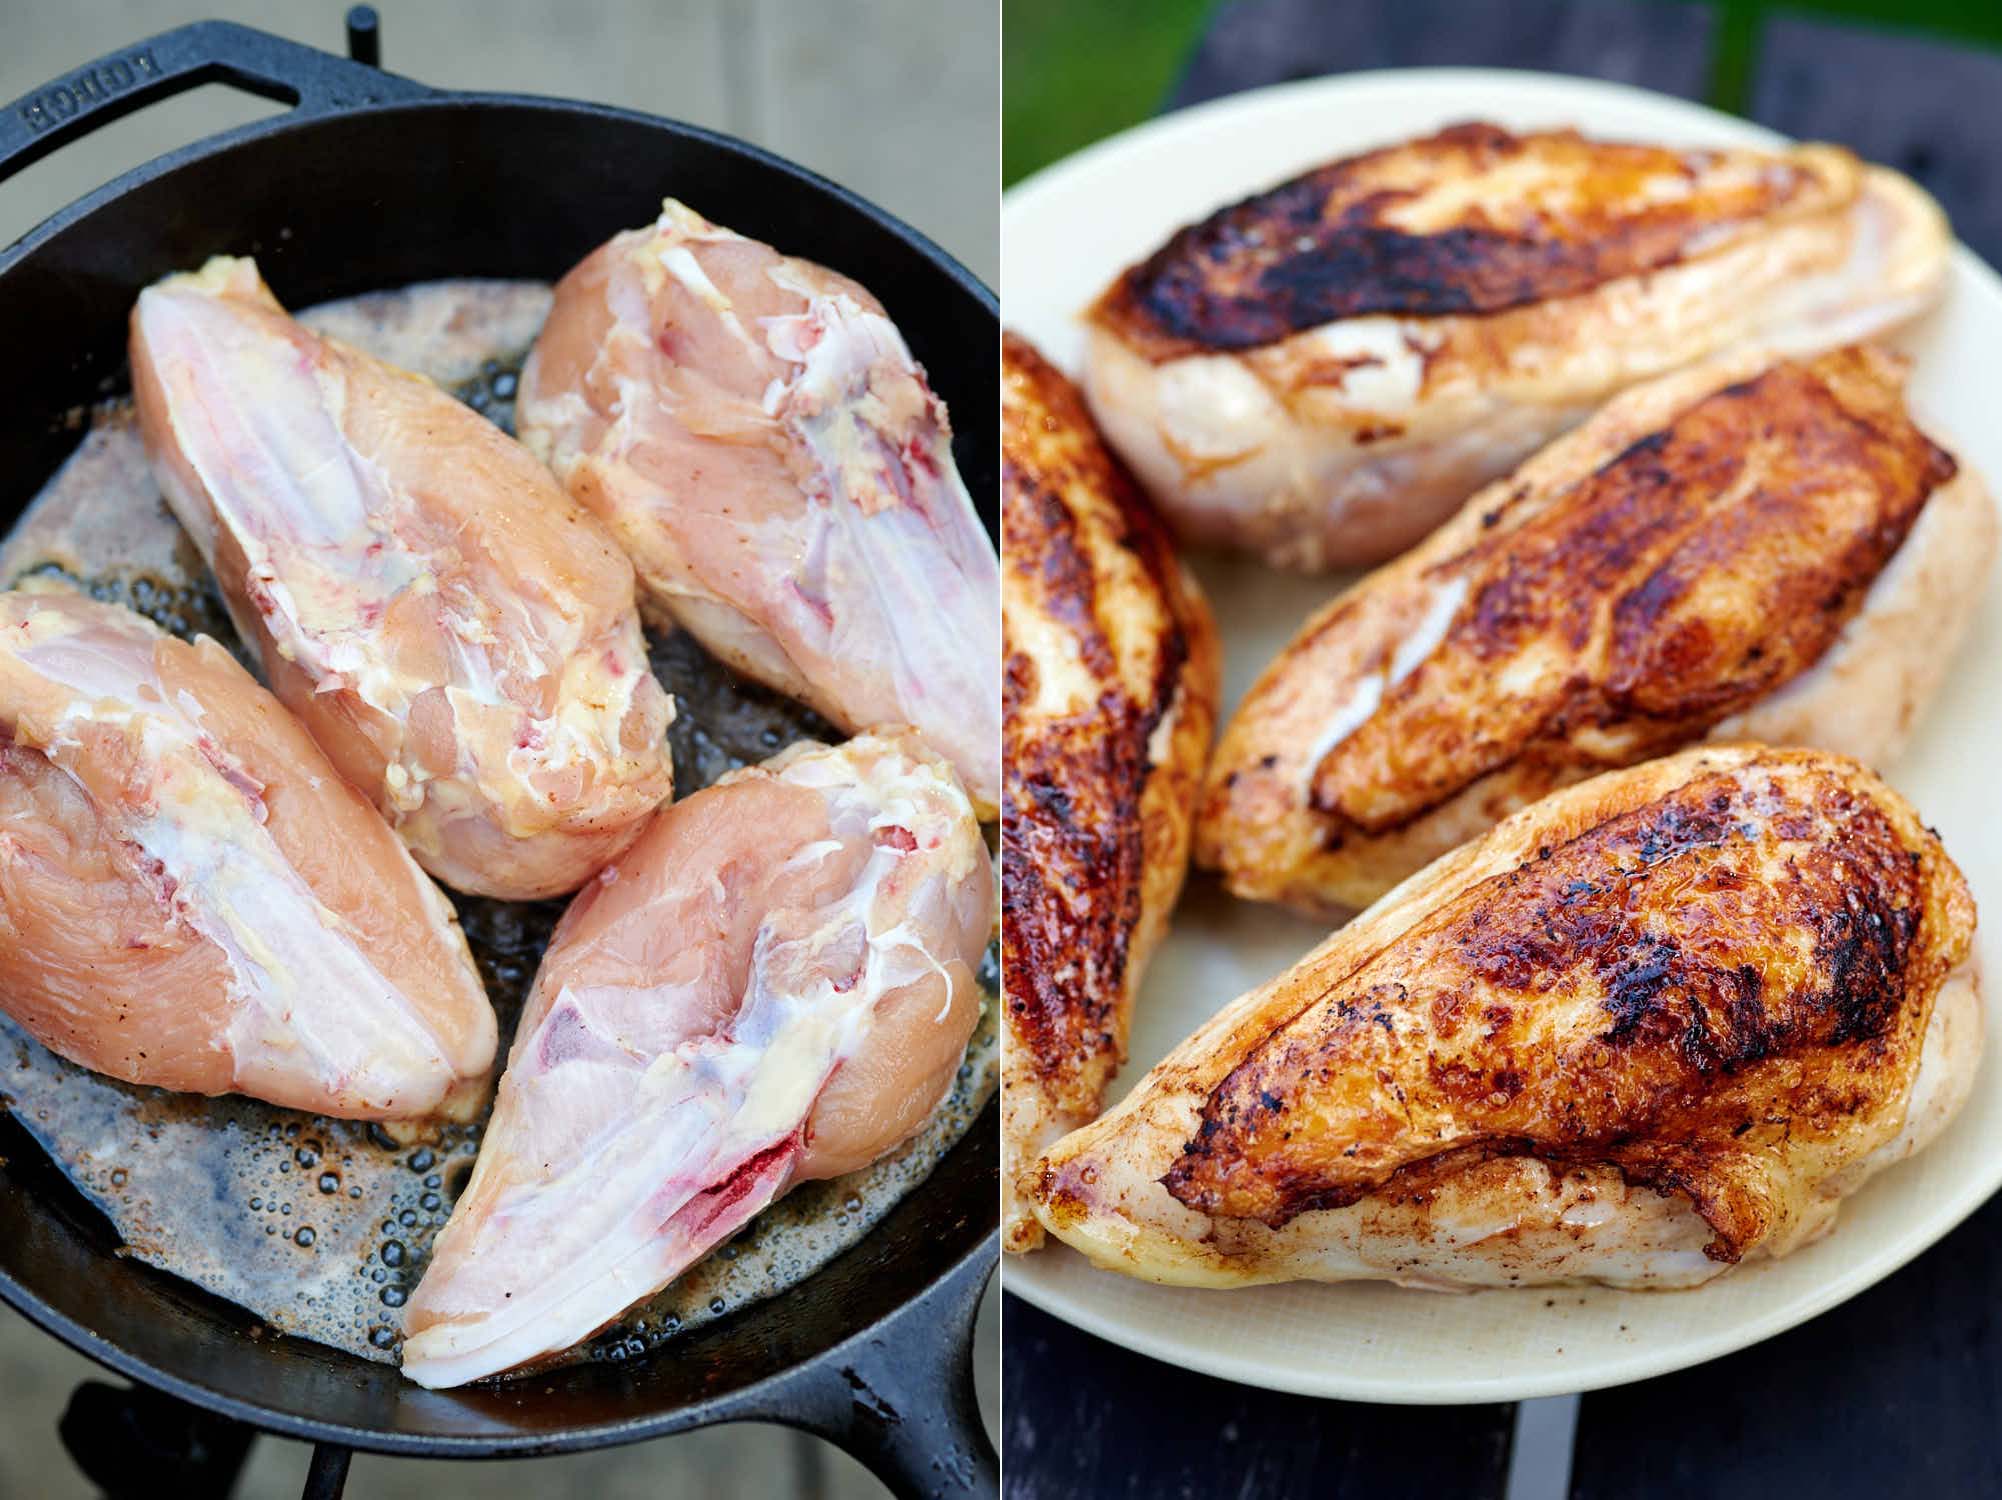 Searing chicken breast skin before smoking